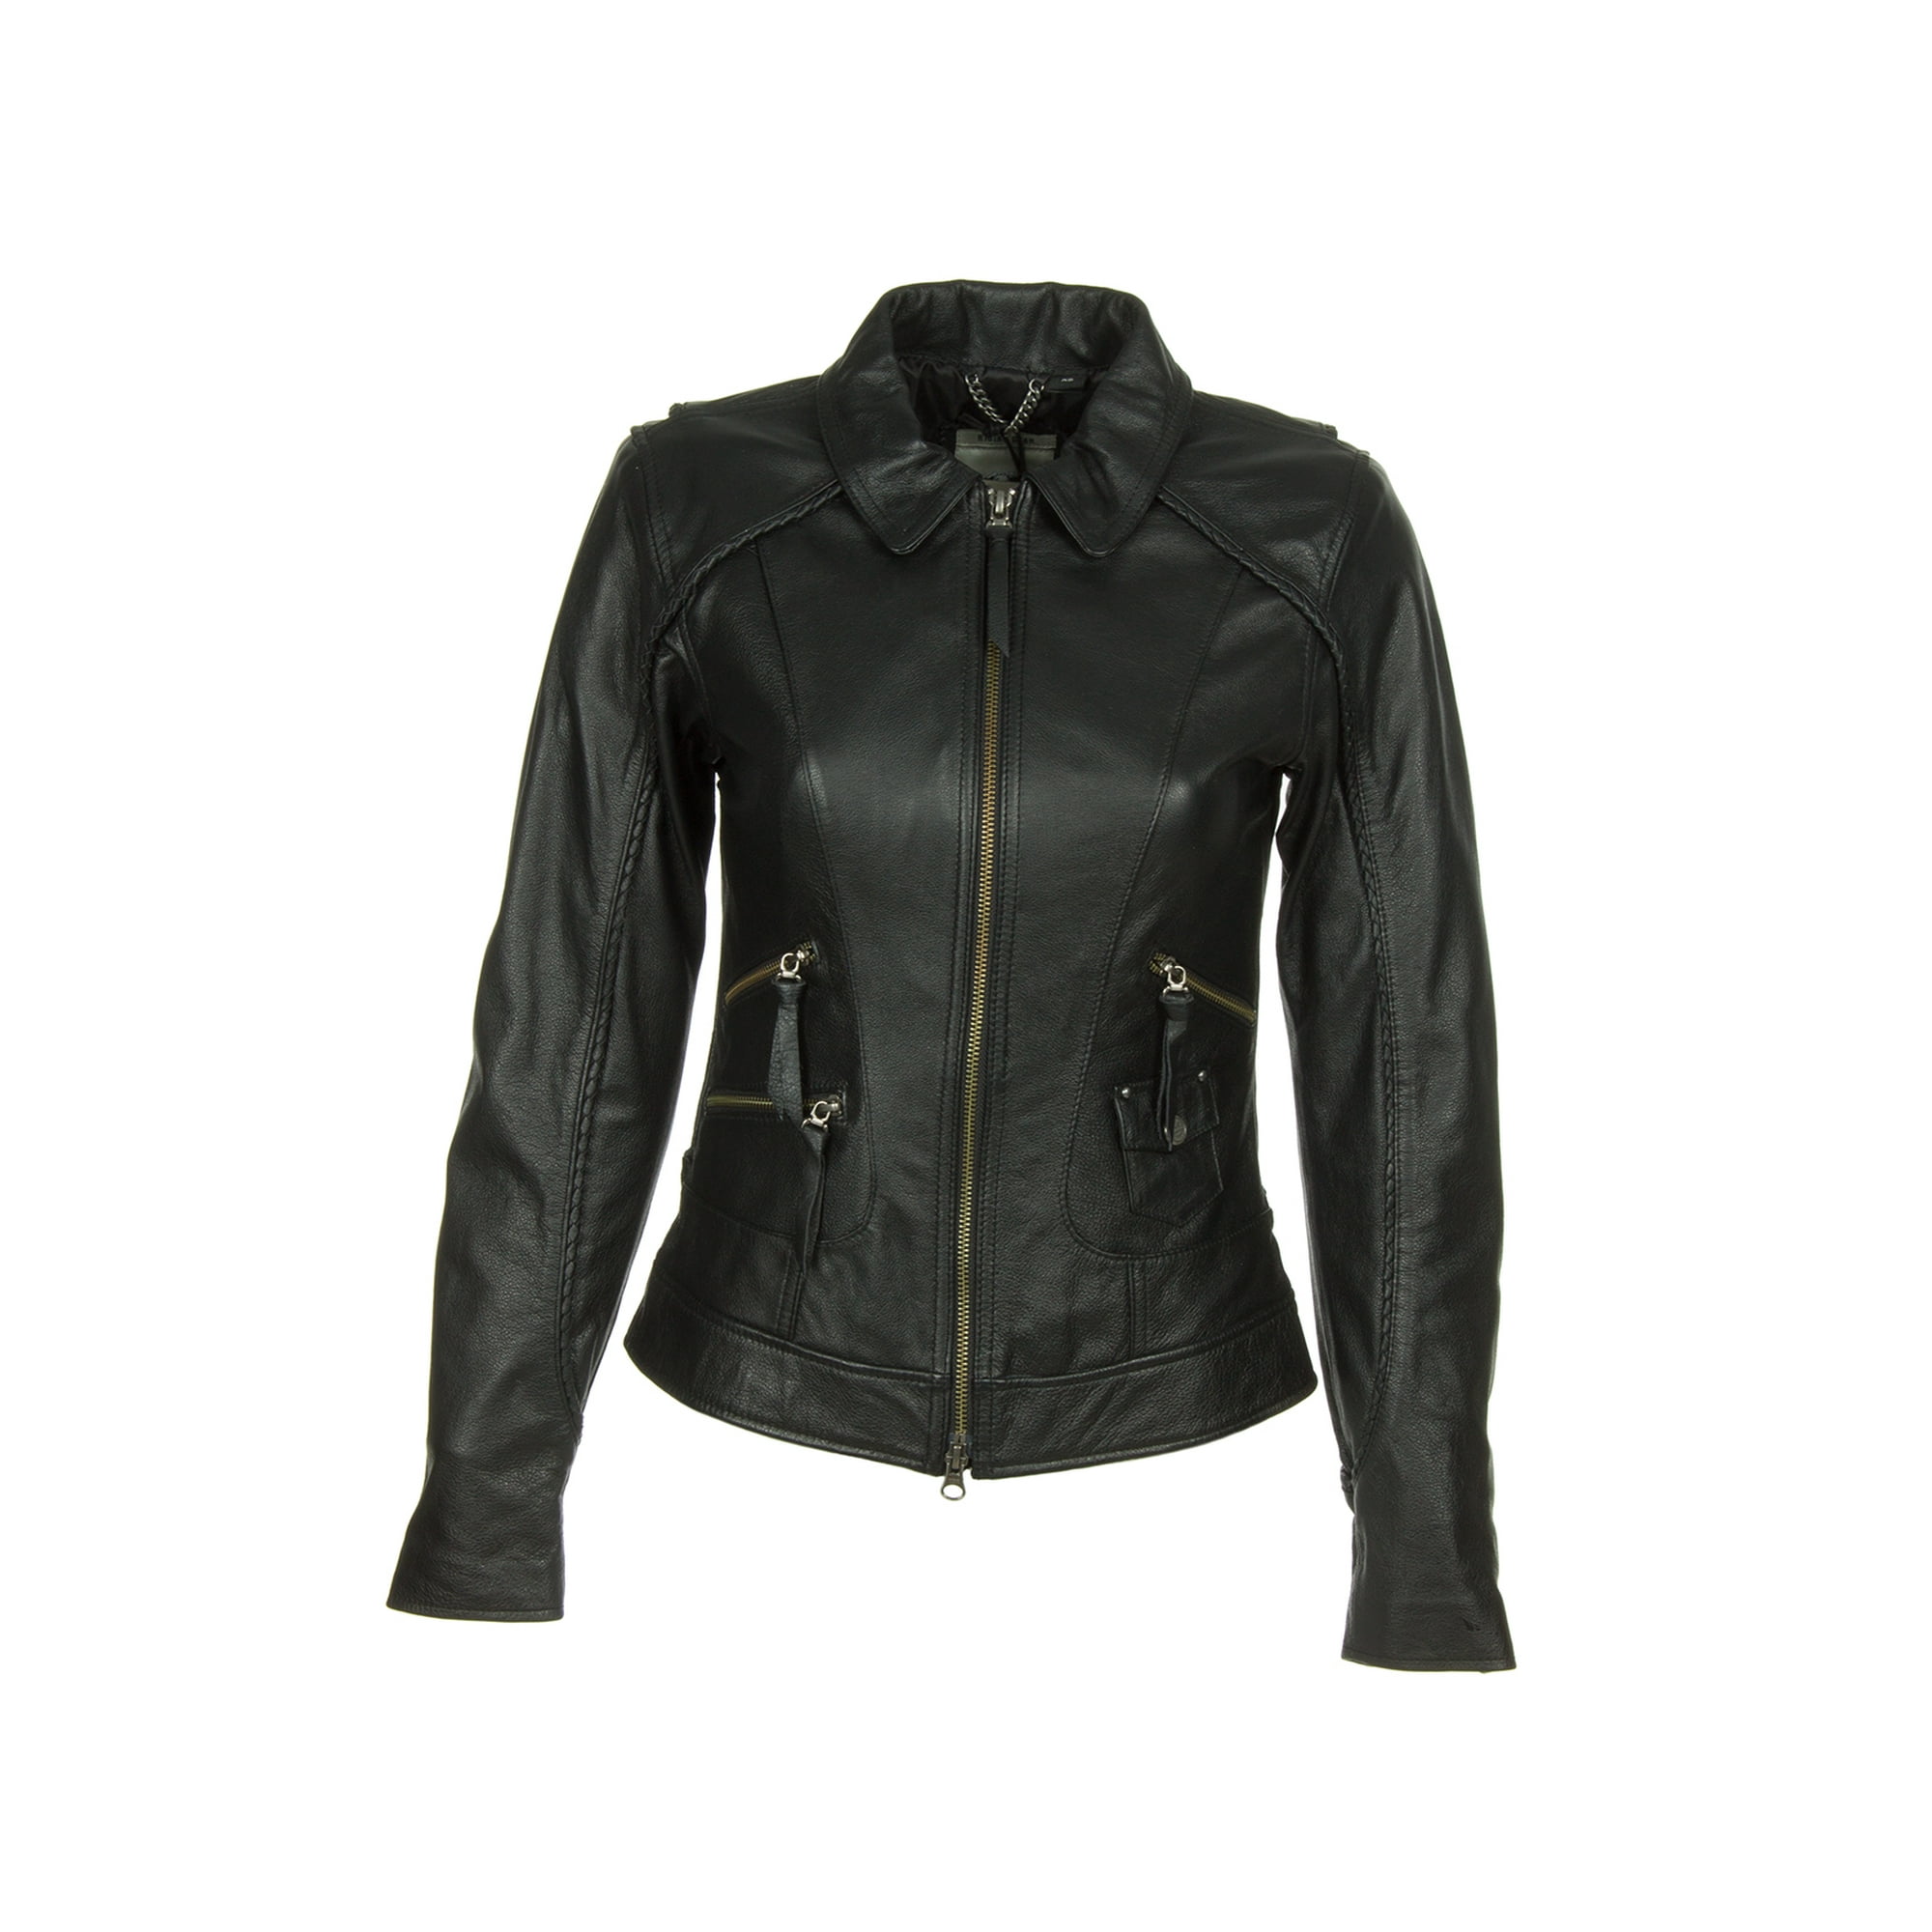 Harley Davidson 98064 13vw Women S Jacket Heritage Black Leather Walmart Canada